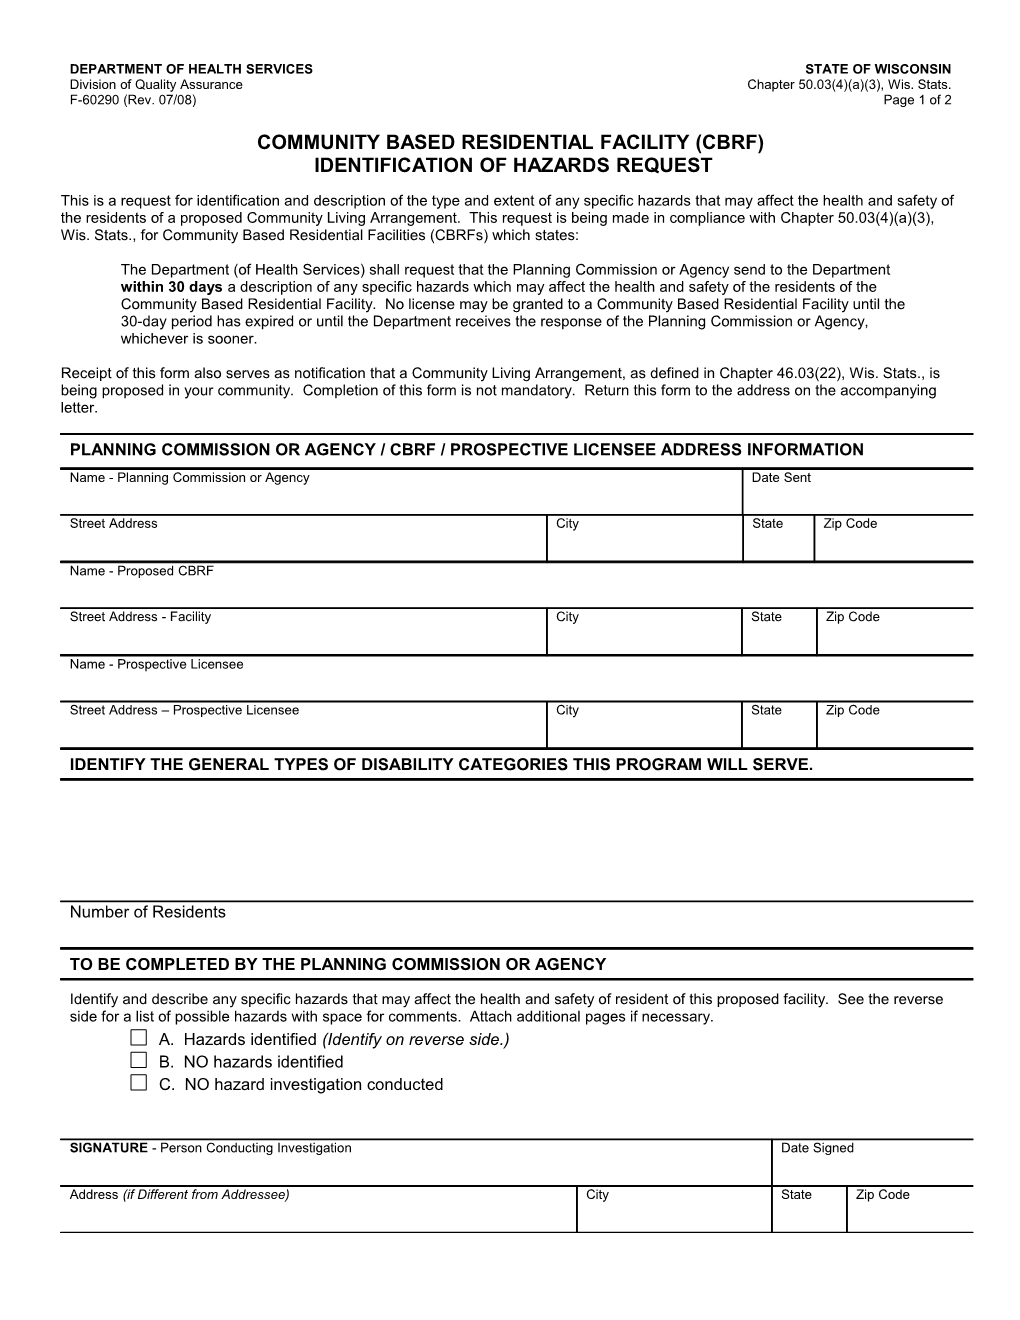 CBRF Identification of Hazards Request, F-60290